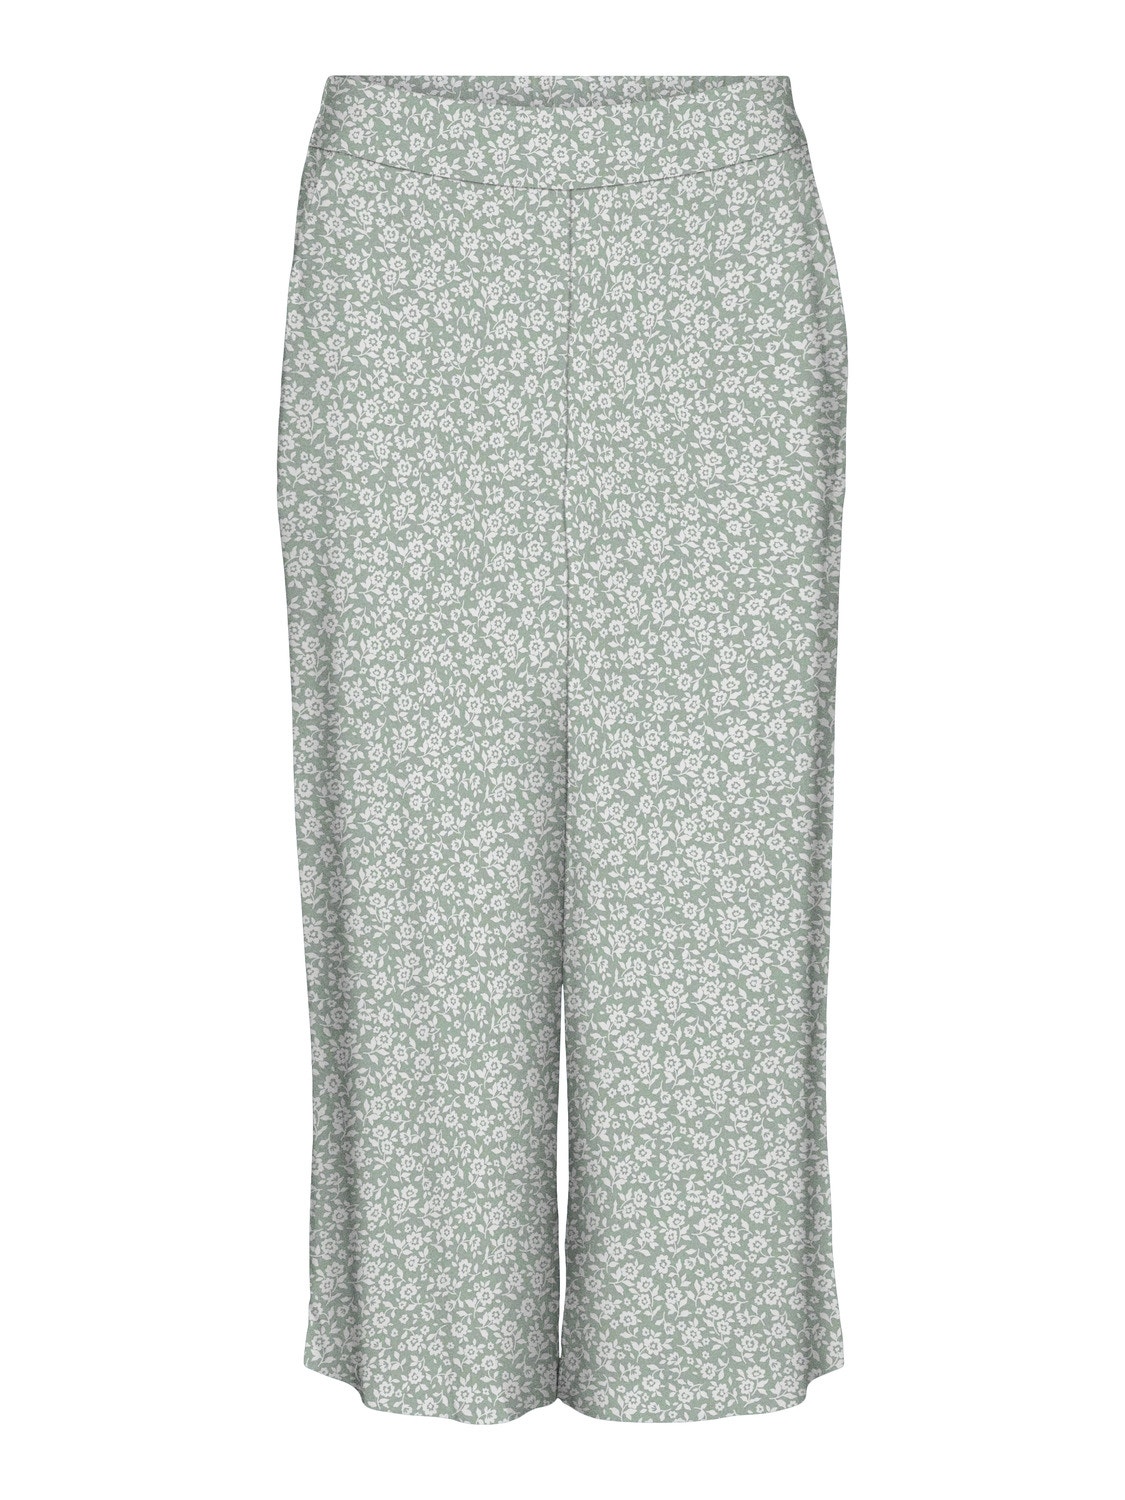 Vero Moda VMEASY Pantalones -Hedge Green - 10308013